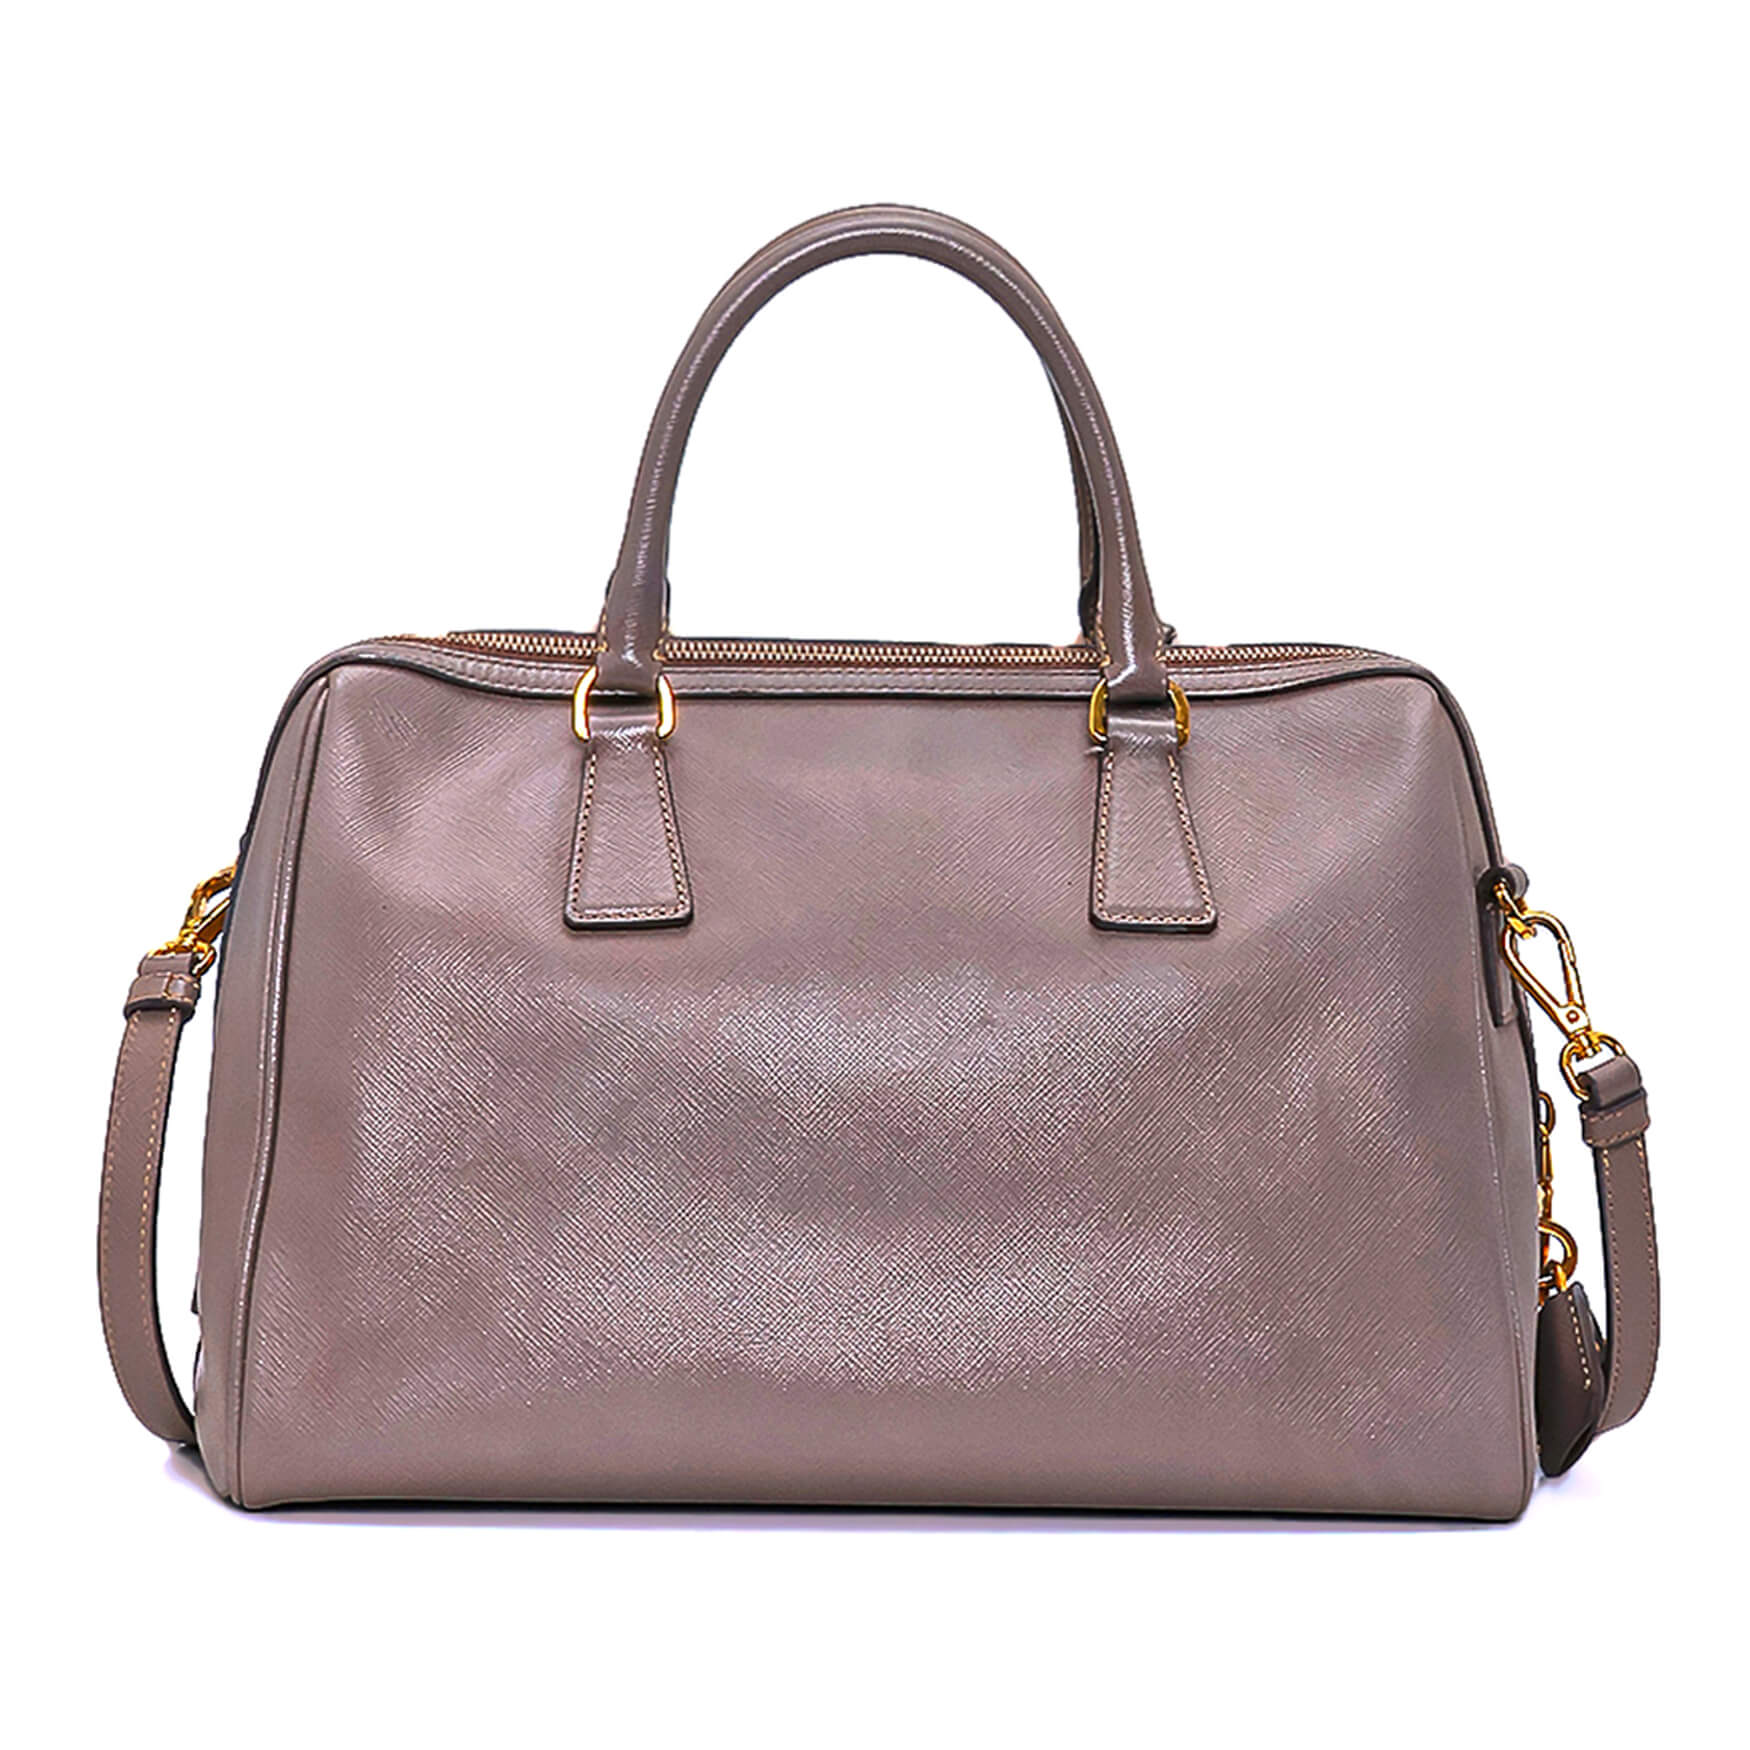 Prada - Stone Leather Handbag